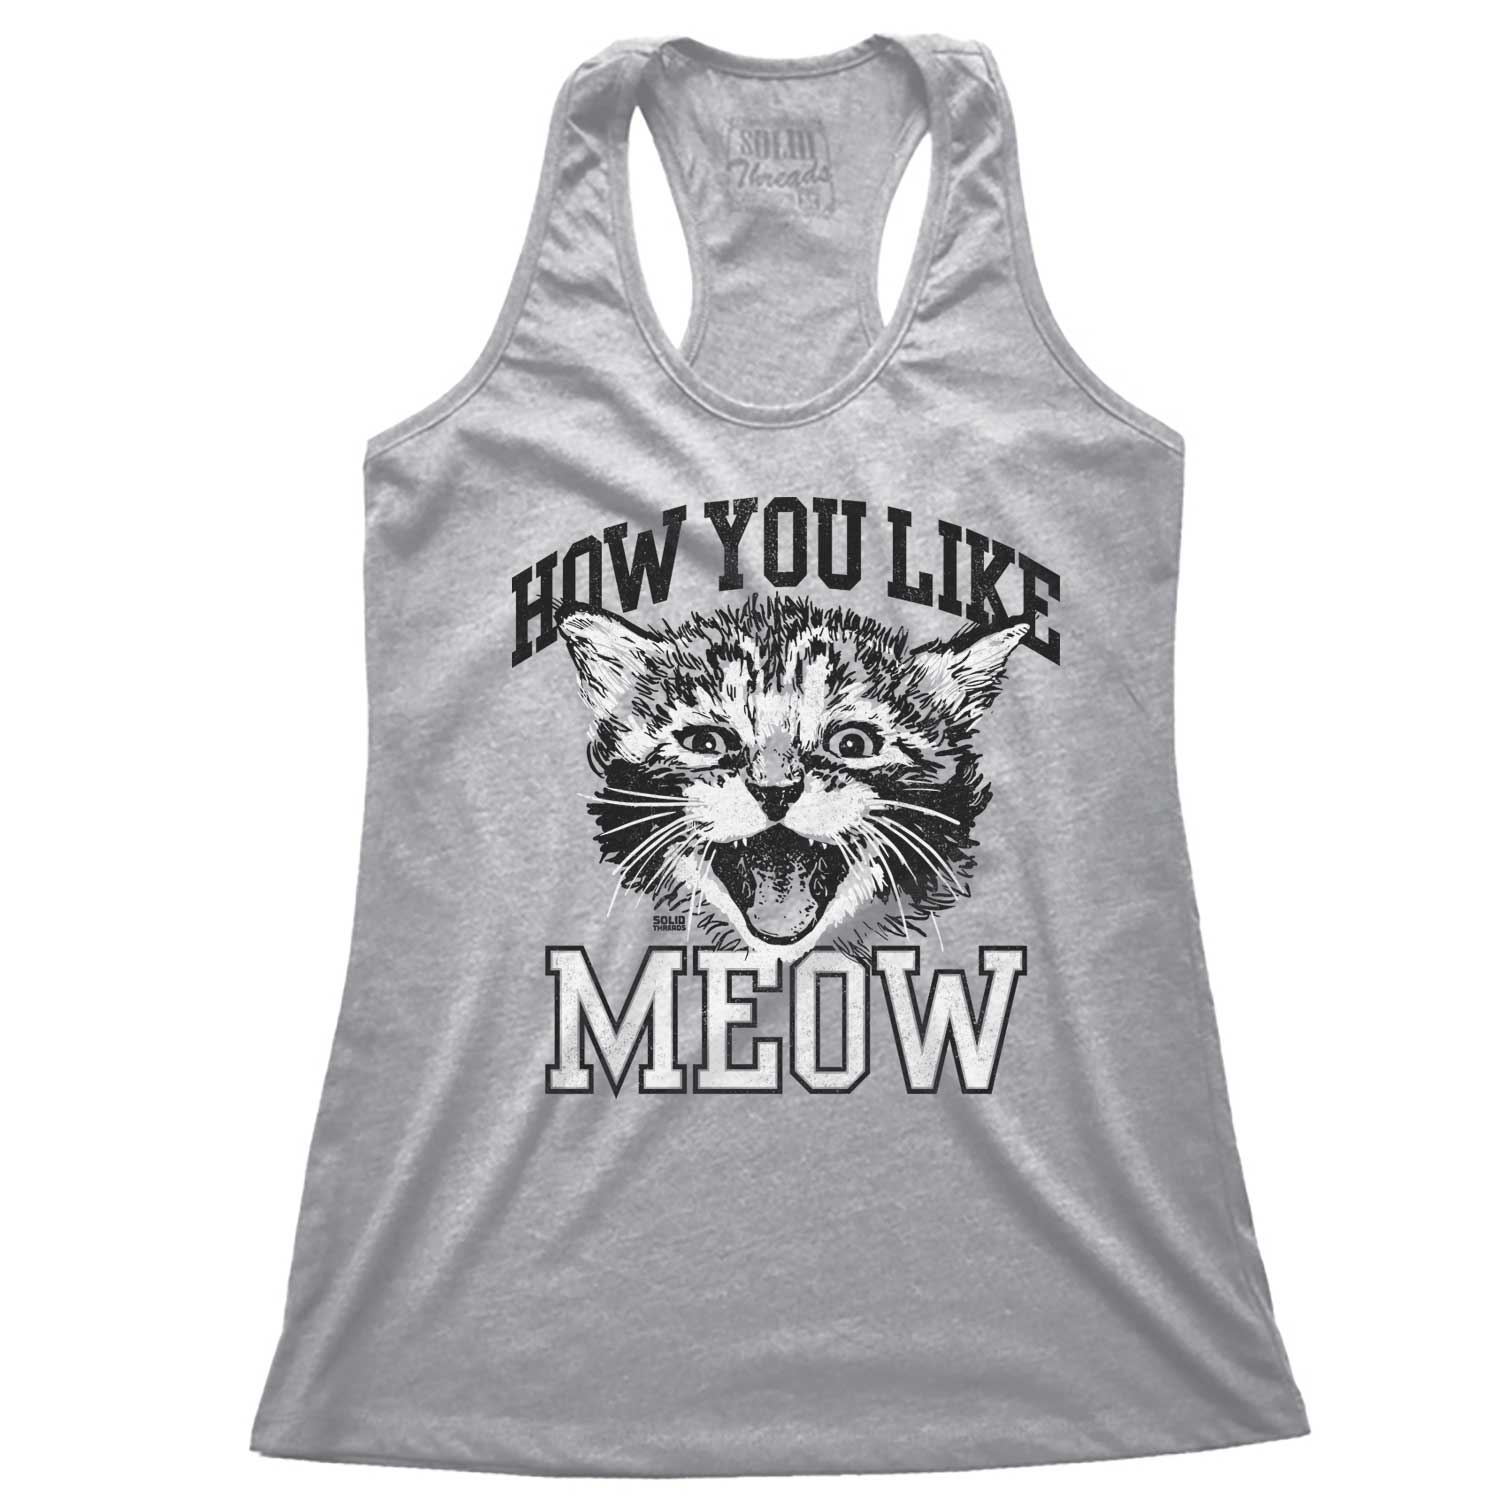 Women's How You Like Meow Tank Top